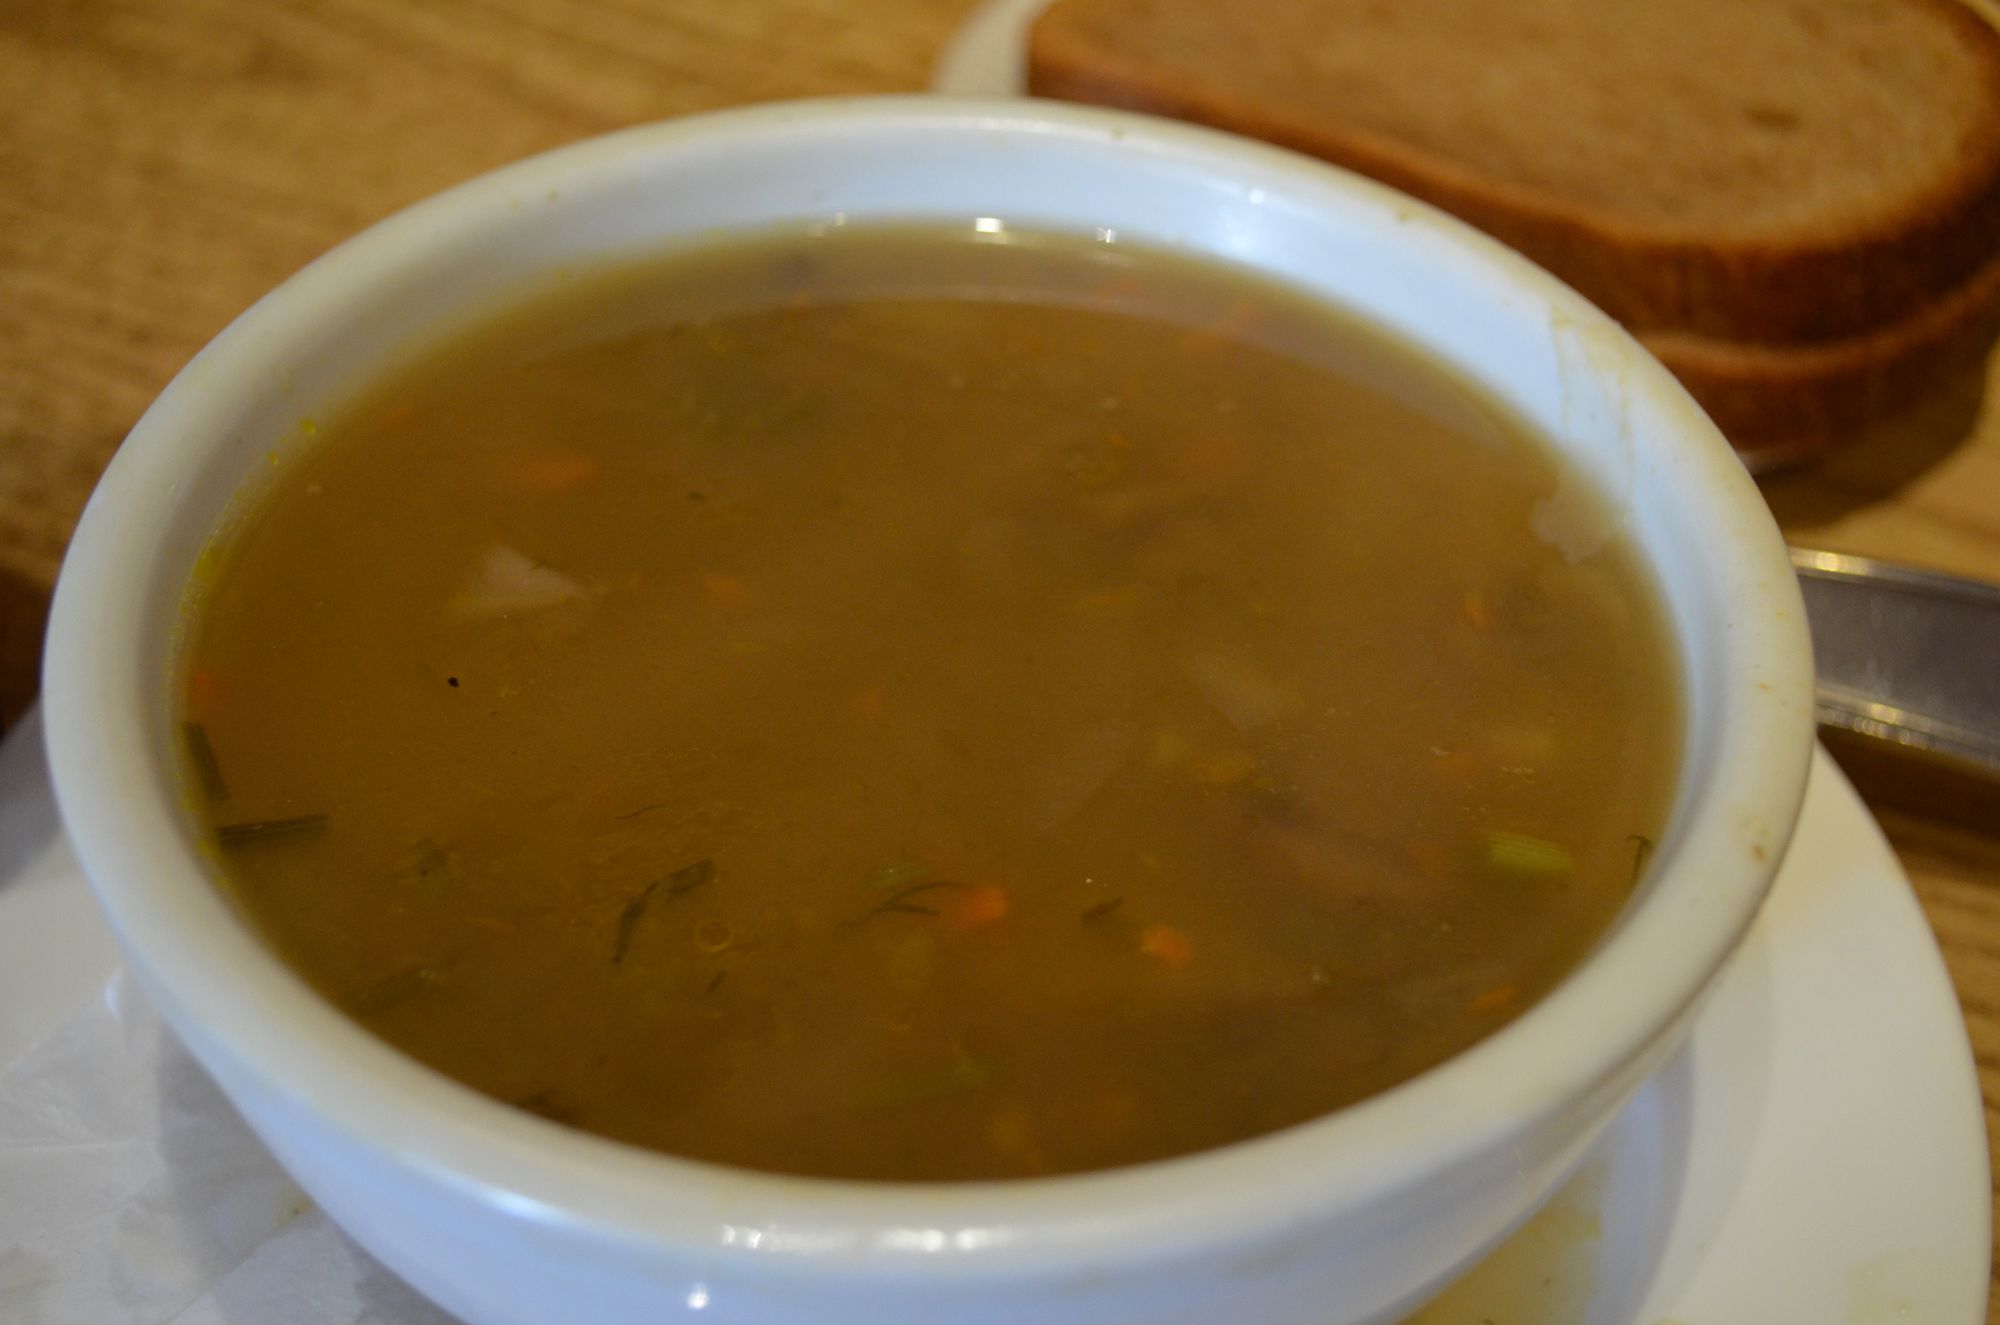 The mushroom and barley soup.